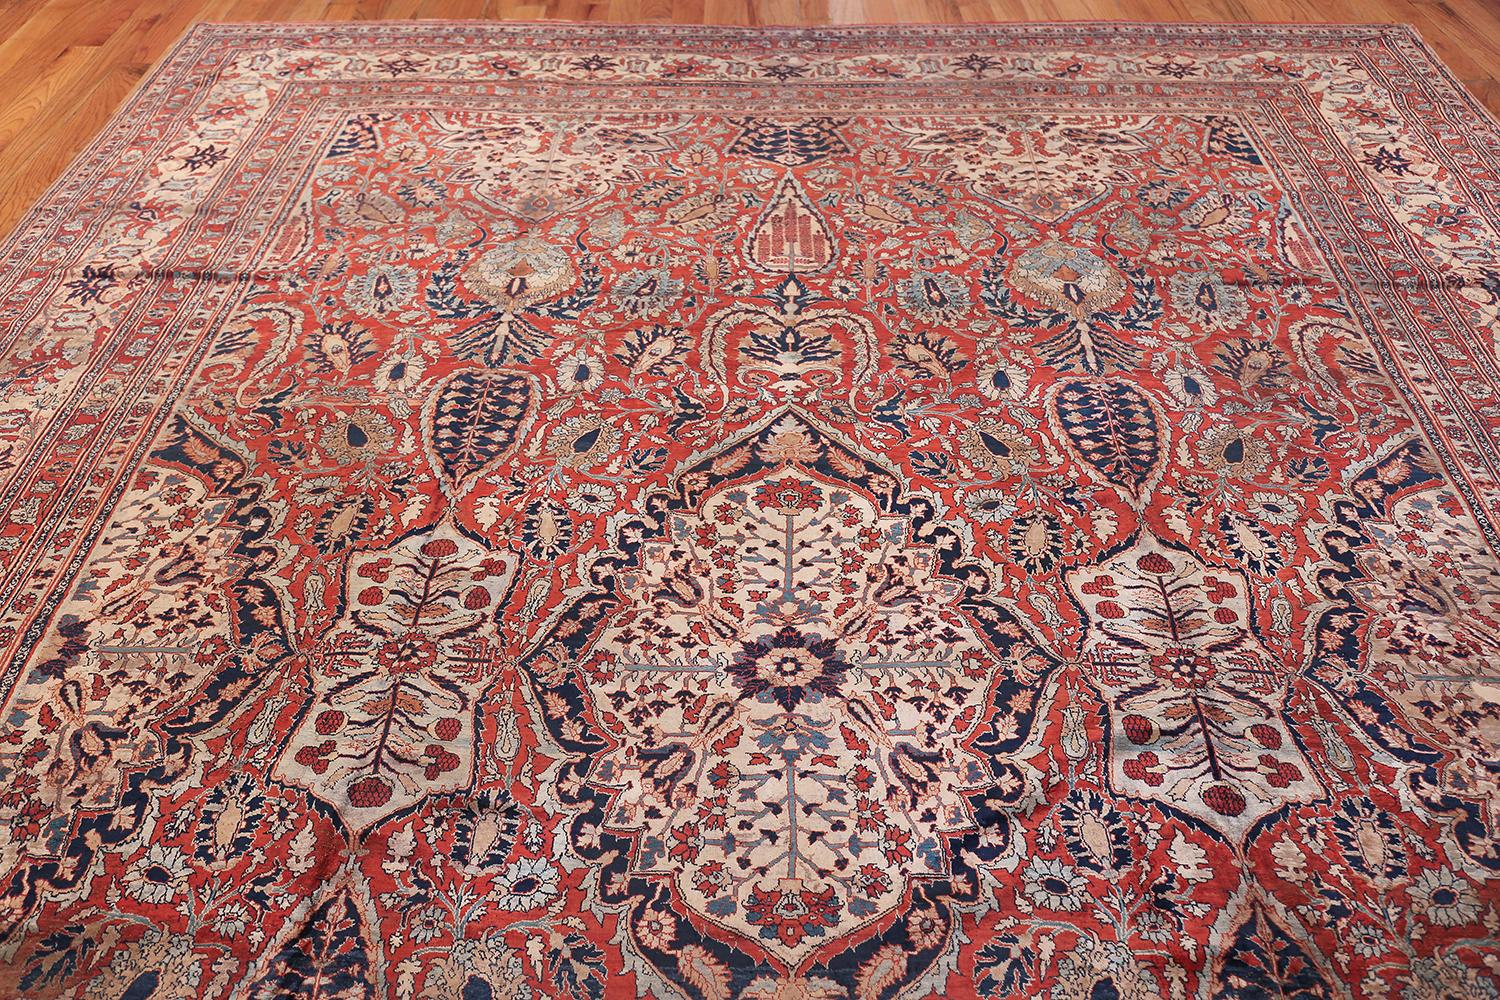 Nazmiyal Collection Antique Persian Silk Heriz Carpet. Size: 10 ft x 13 ft 2